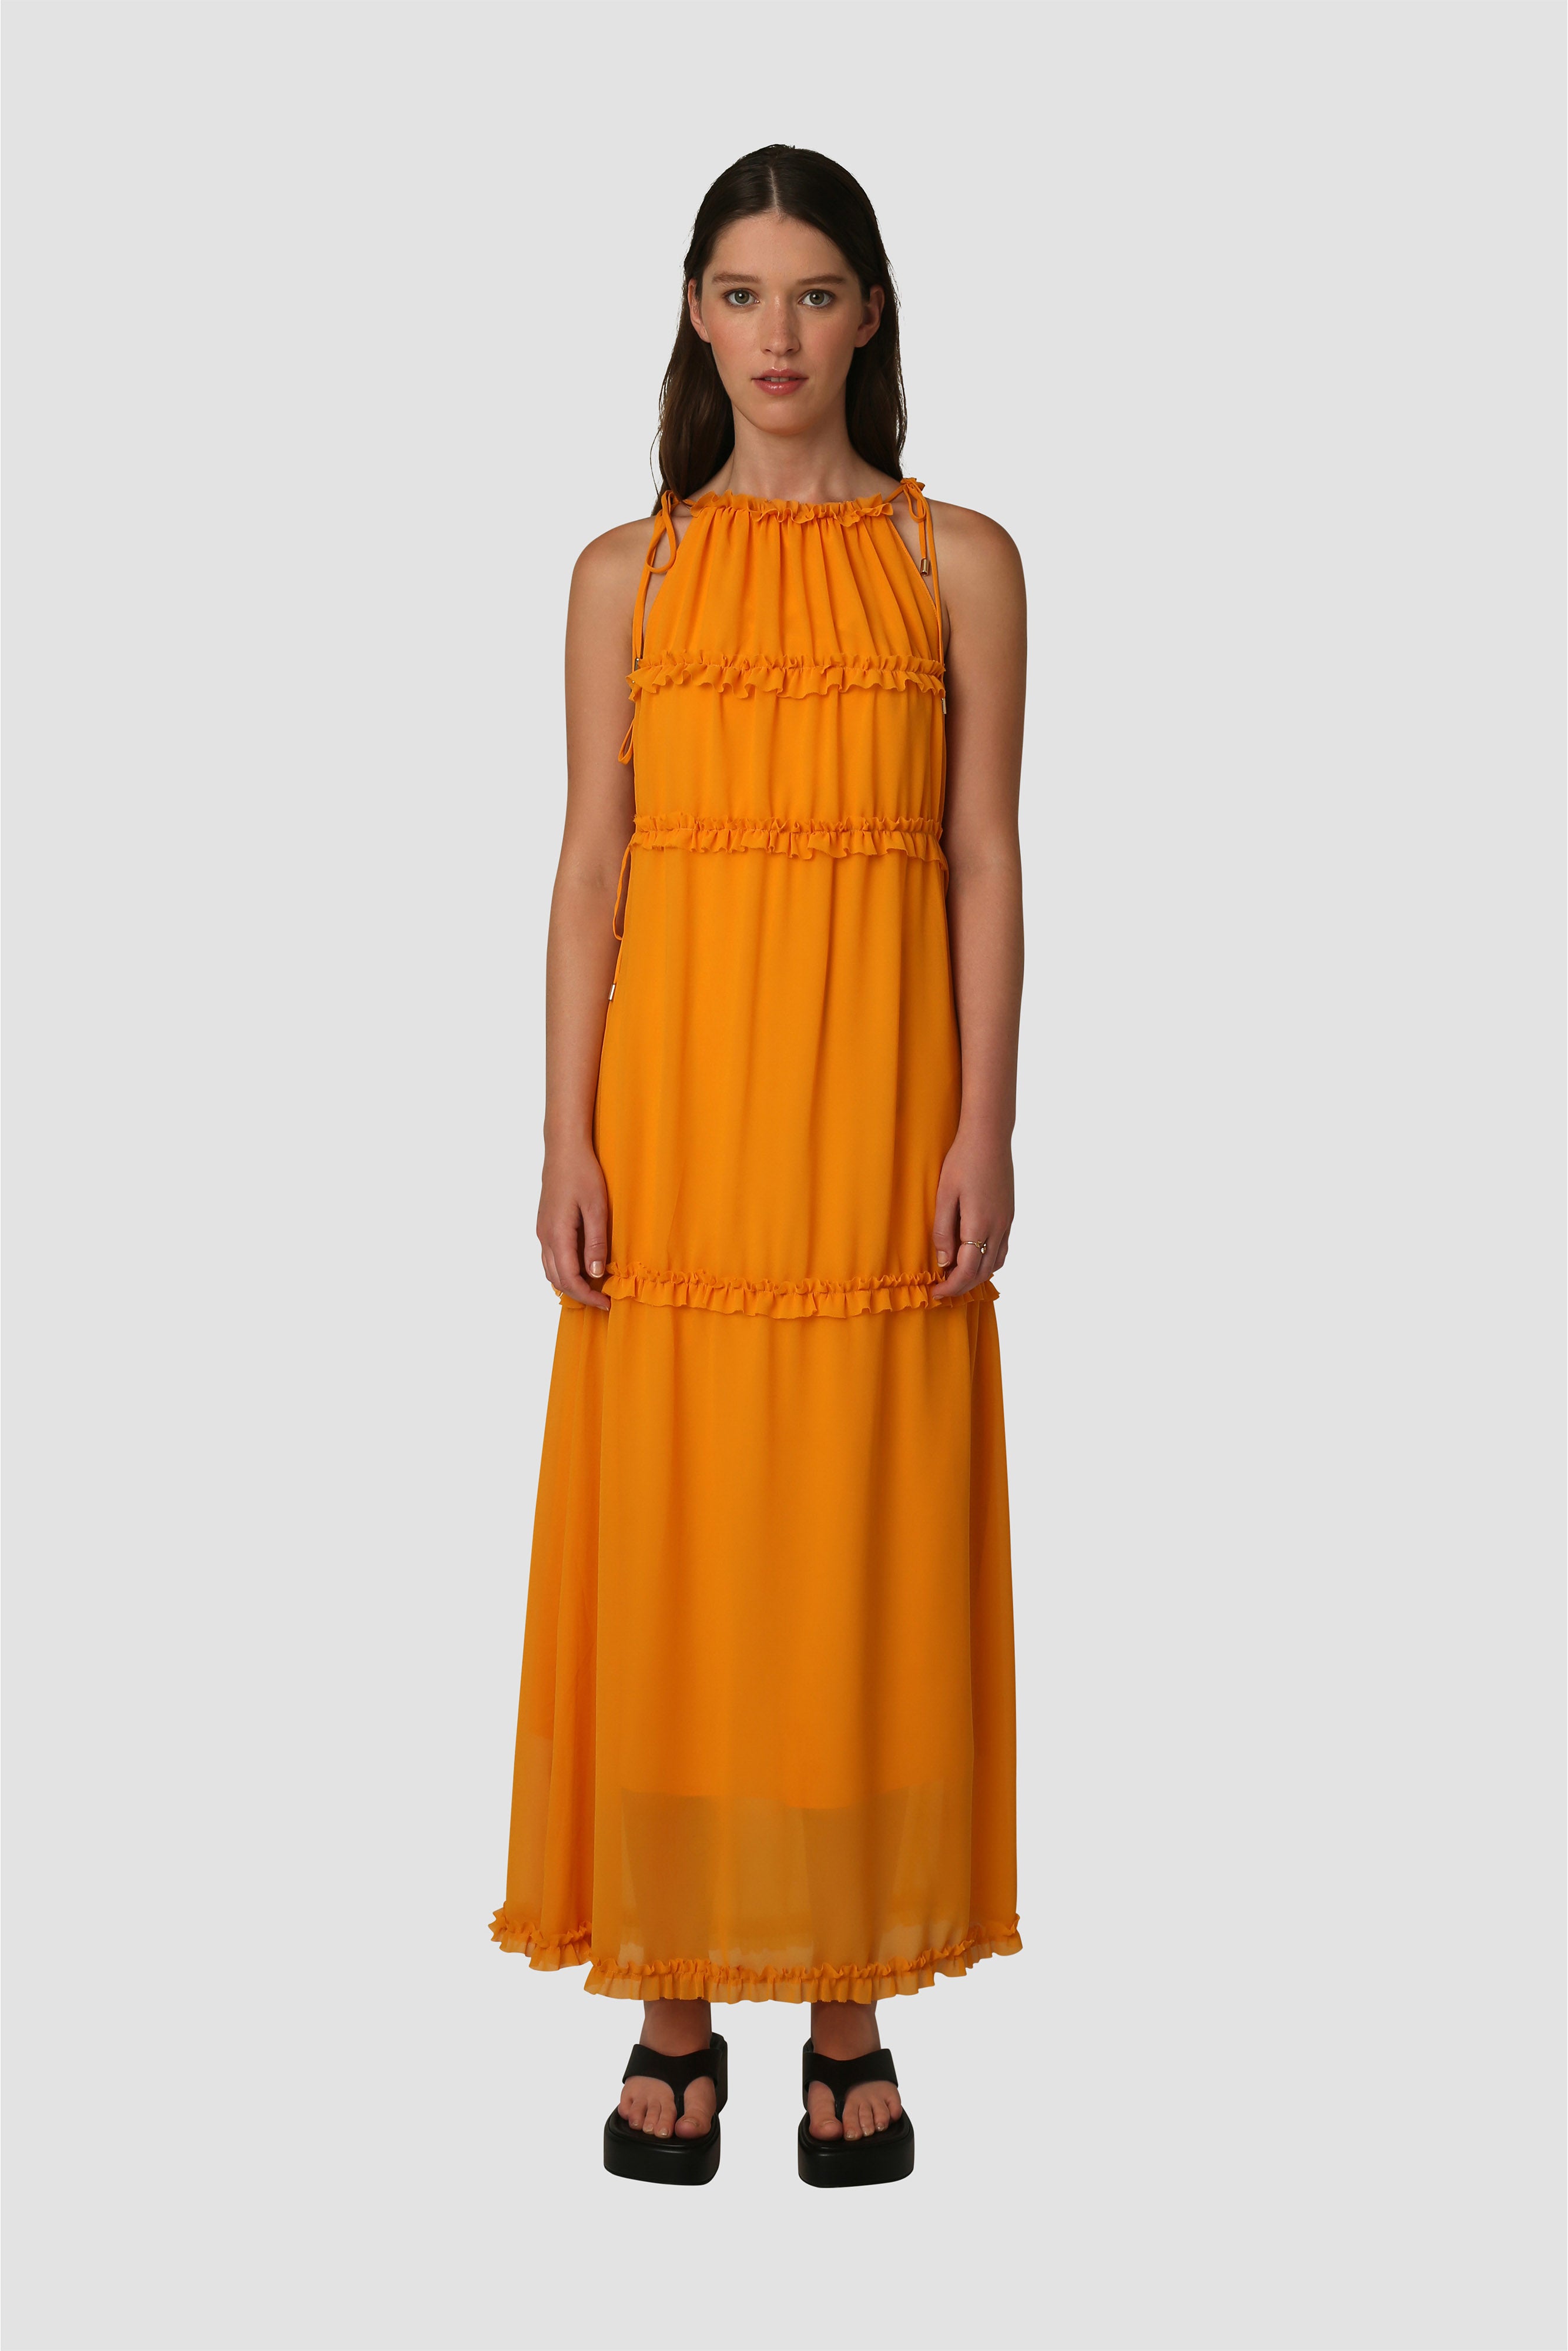 Dallas Summer Lightweight Orange Sleeveless Ruffle Maxi Dress